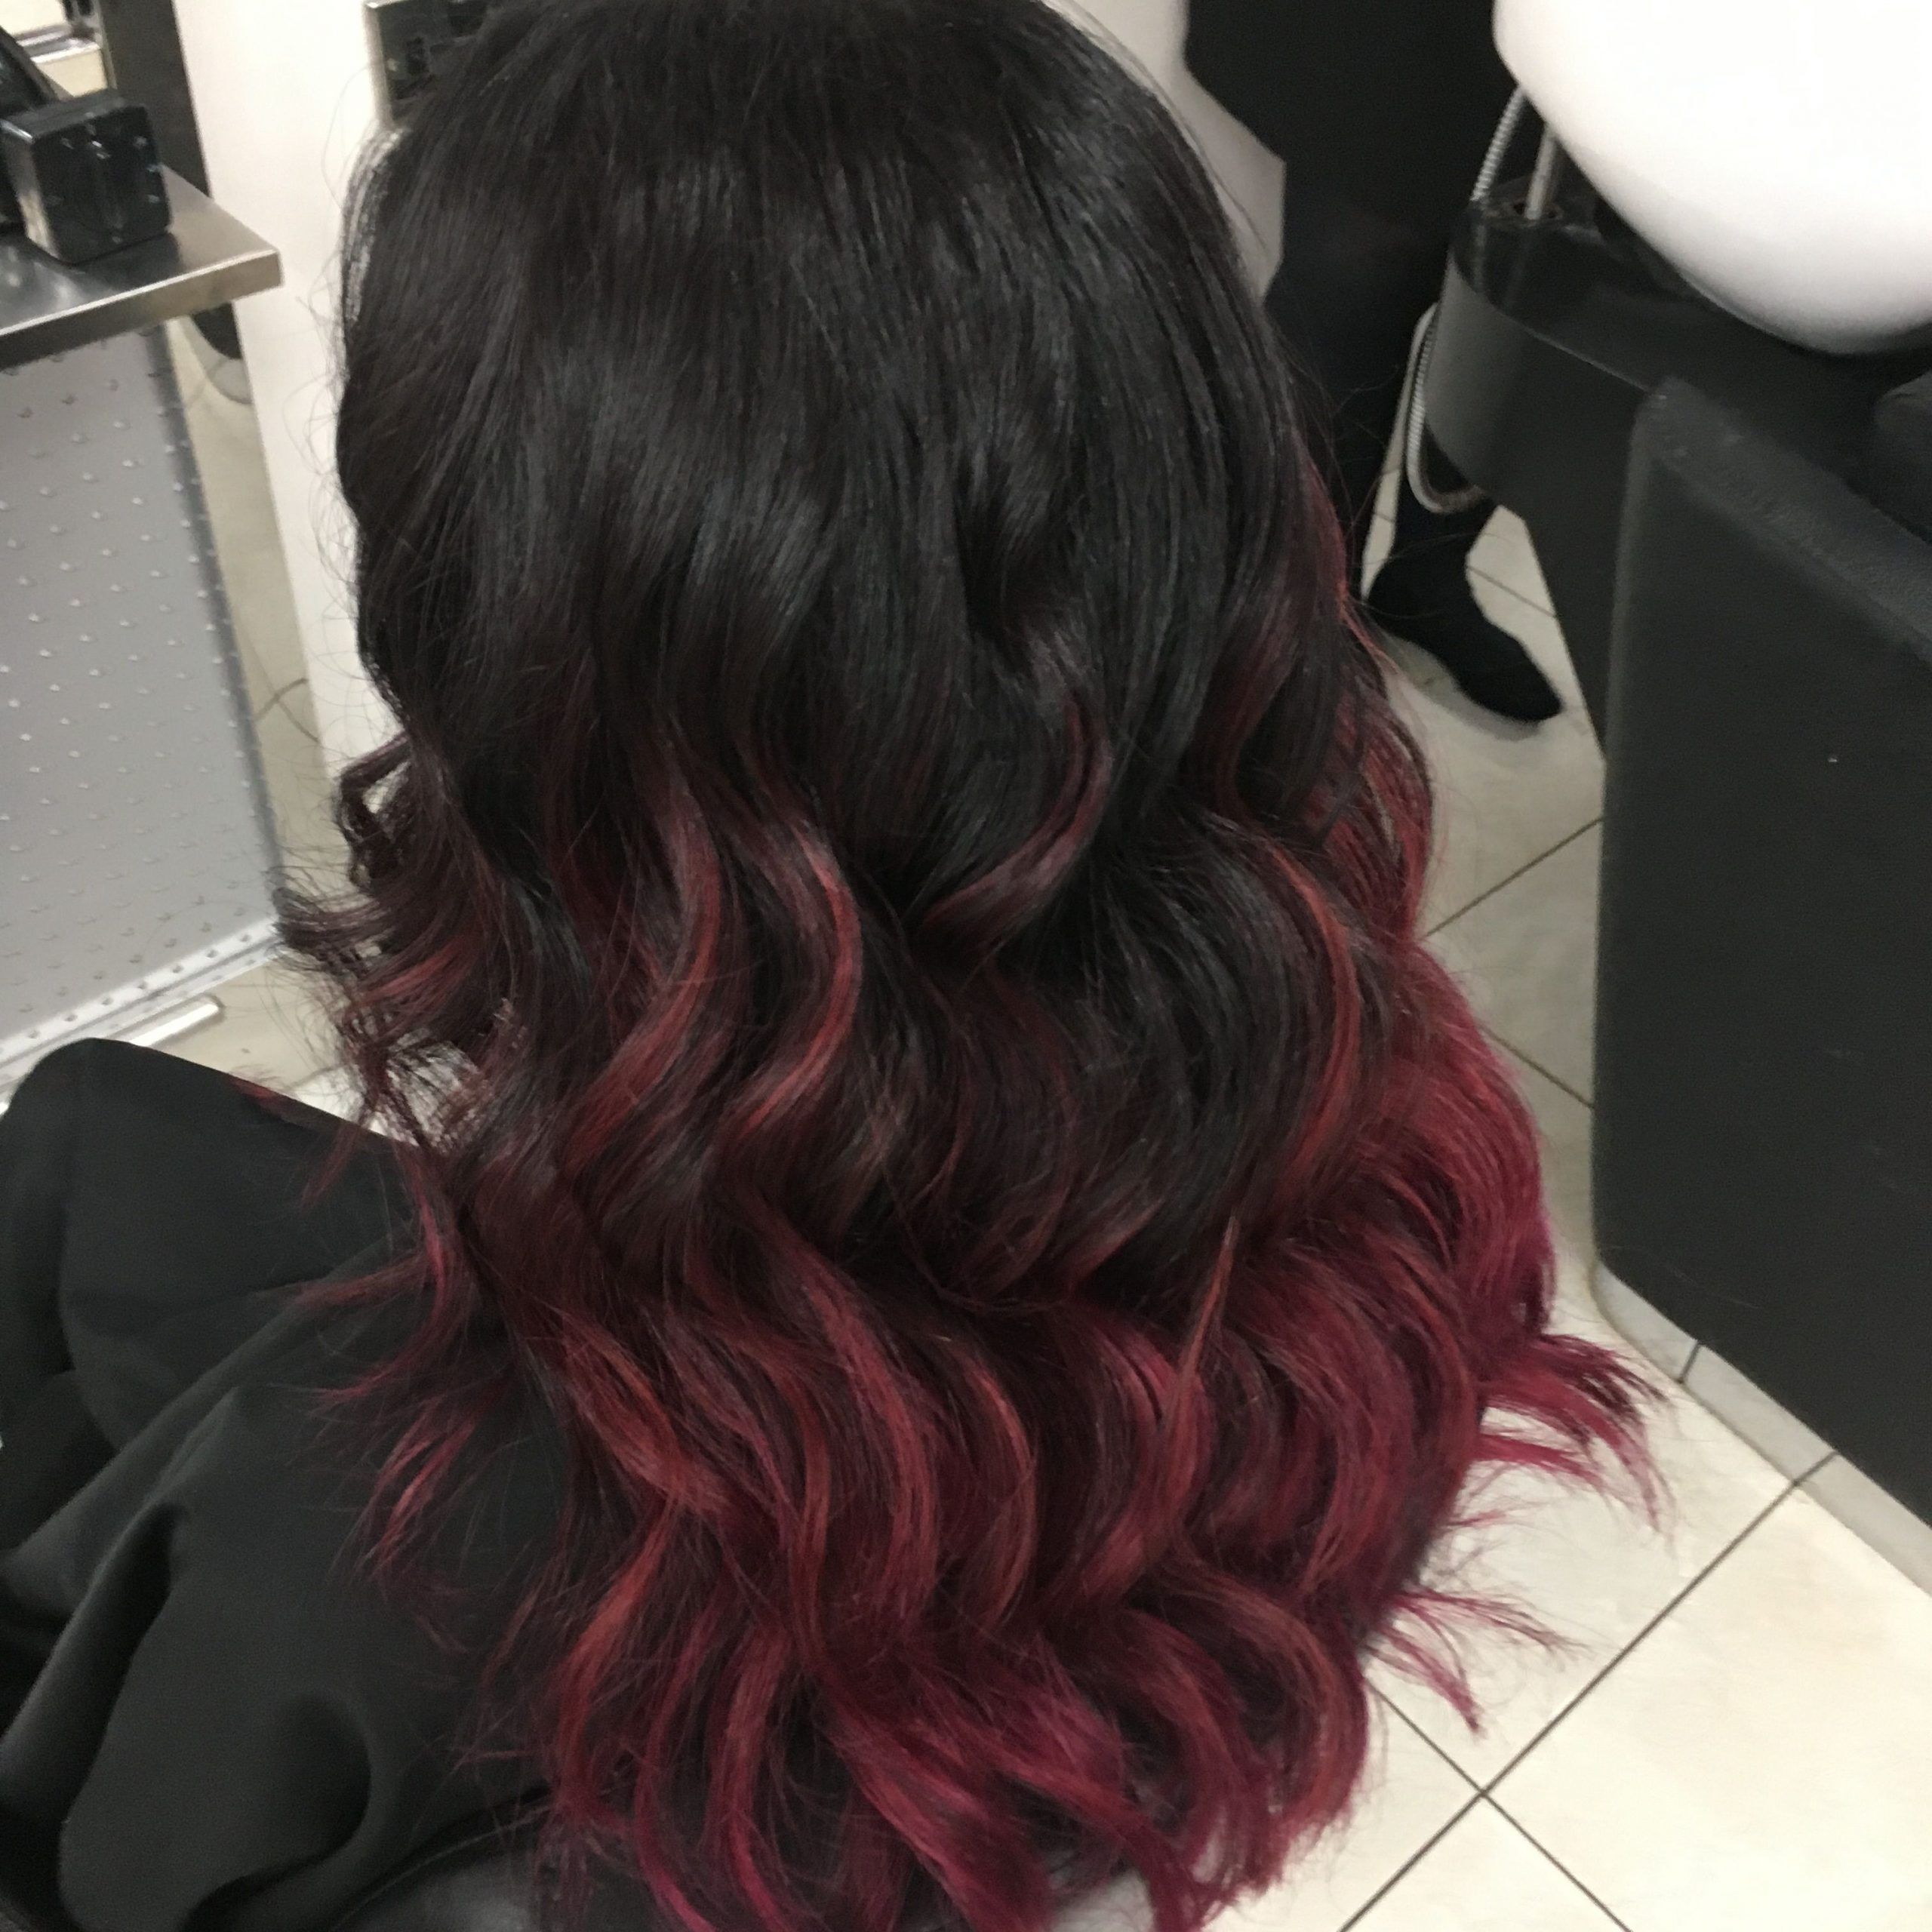 Wavy, Curls, Pink, Burgundy, Black, Balayage Hairstyle Intended For Burgundy Balayage On Dark Hairstyles (View 6 of 20)